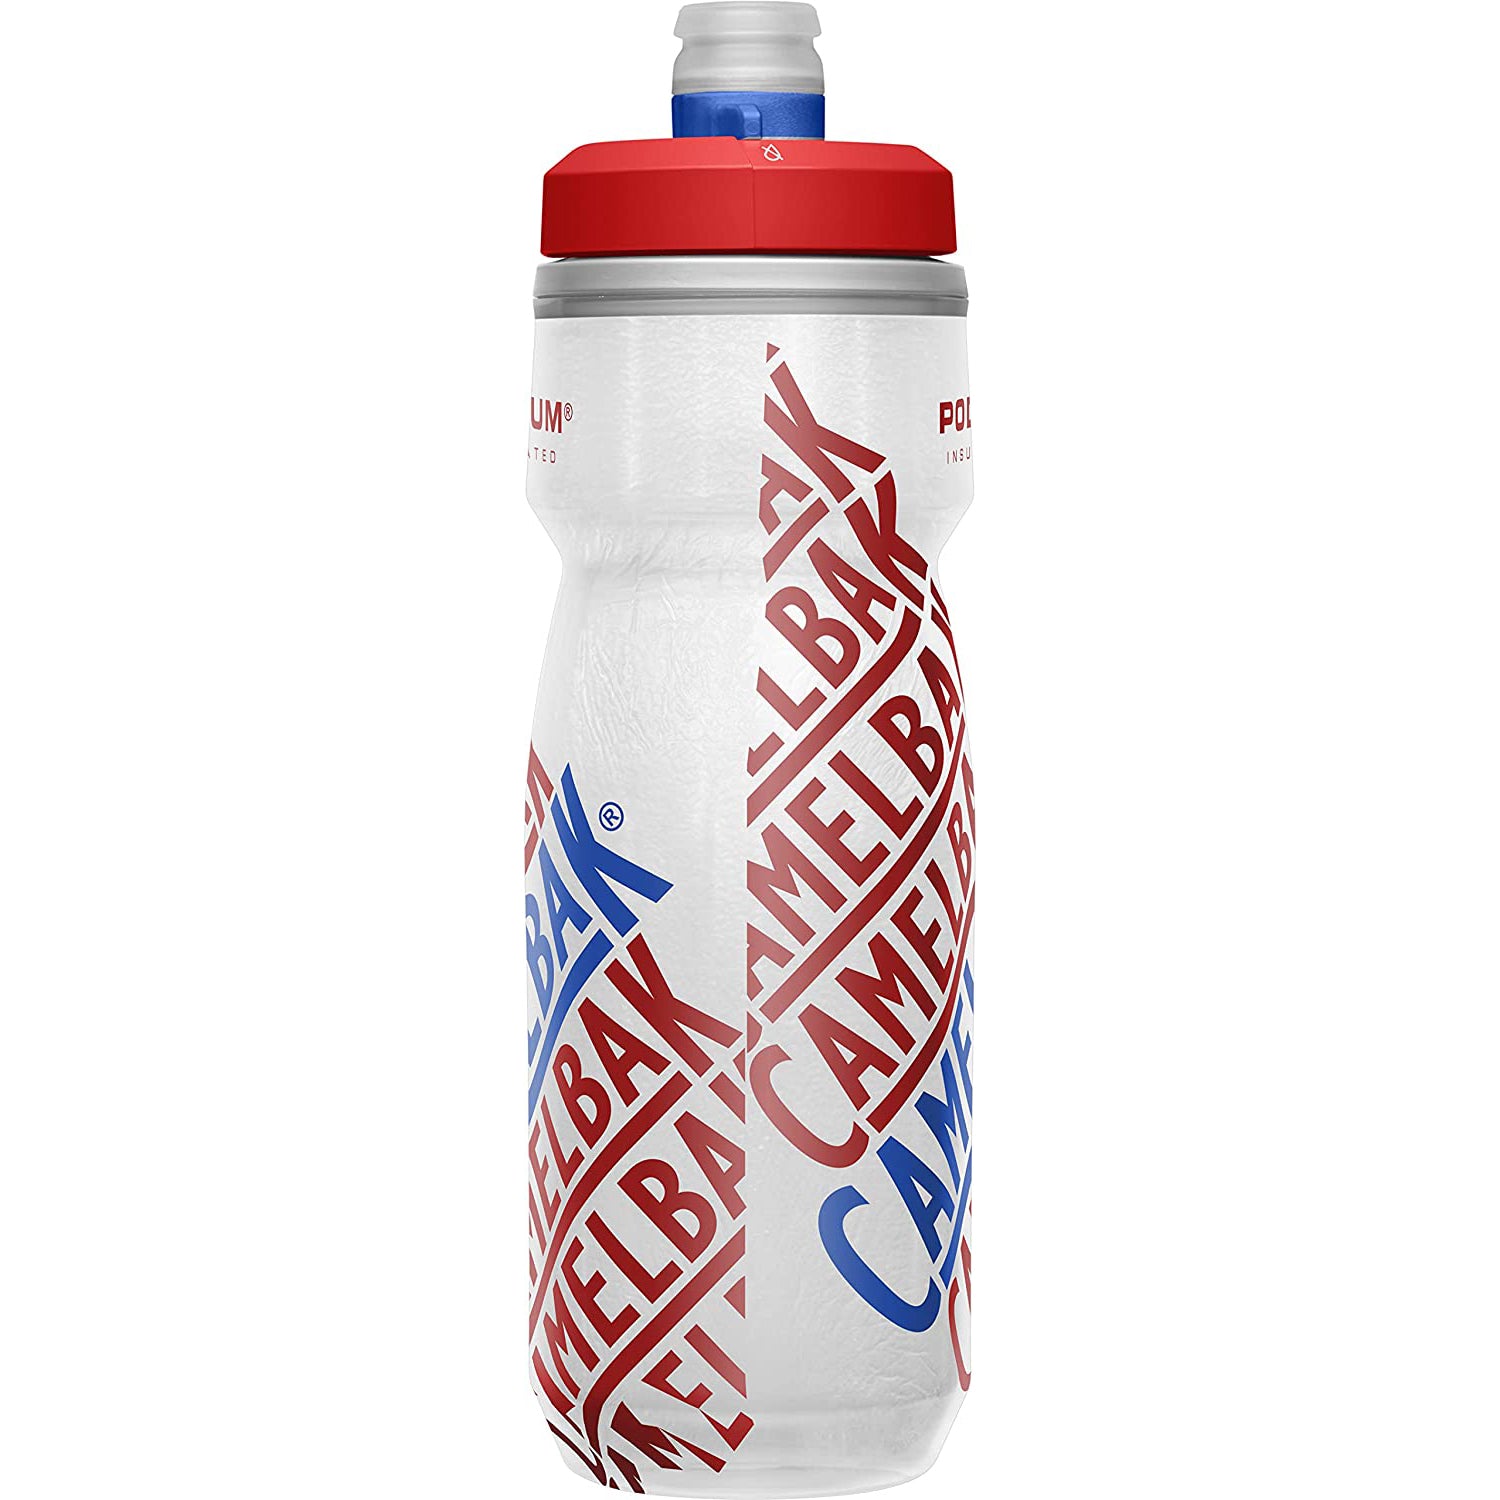 Camelbak Podium Chill Outdoor Bottle, Race Edition Red - 21OZ/620 ML - Best Price online Prokicksports.com